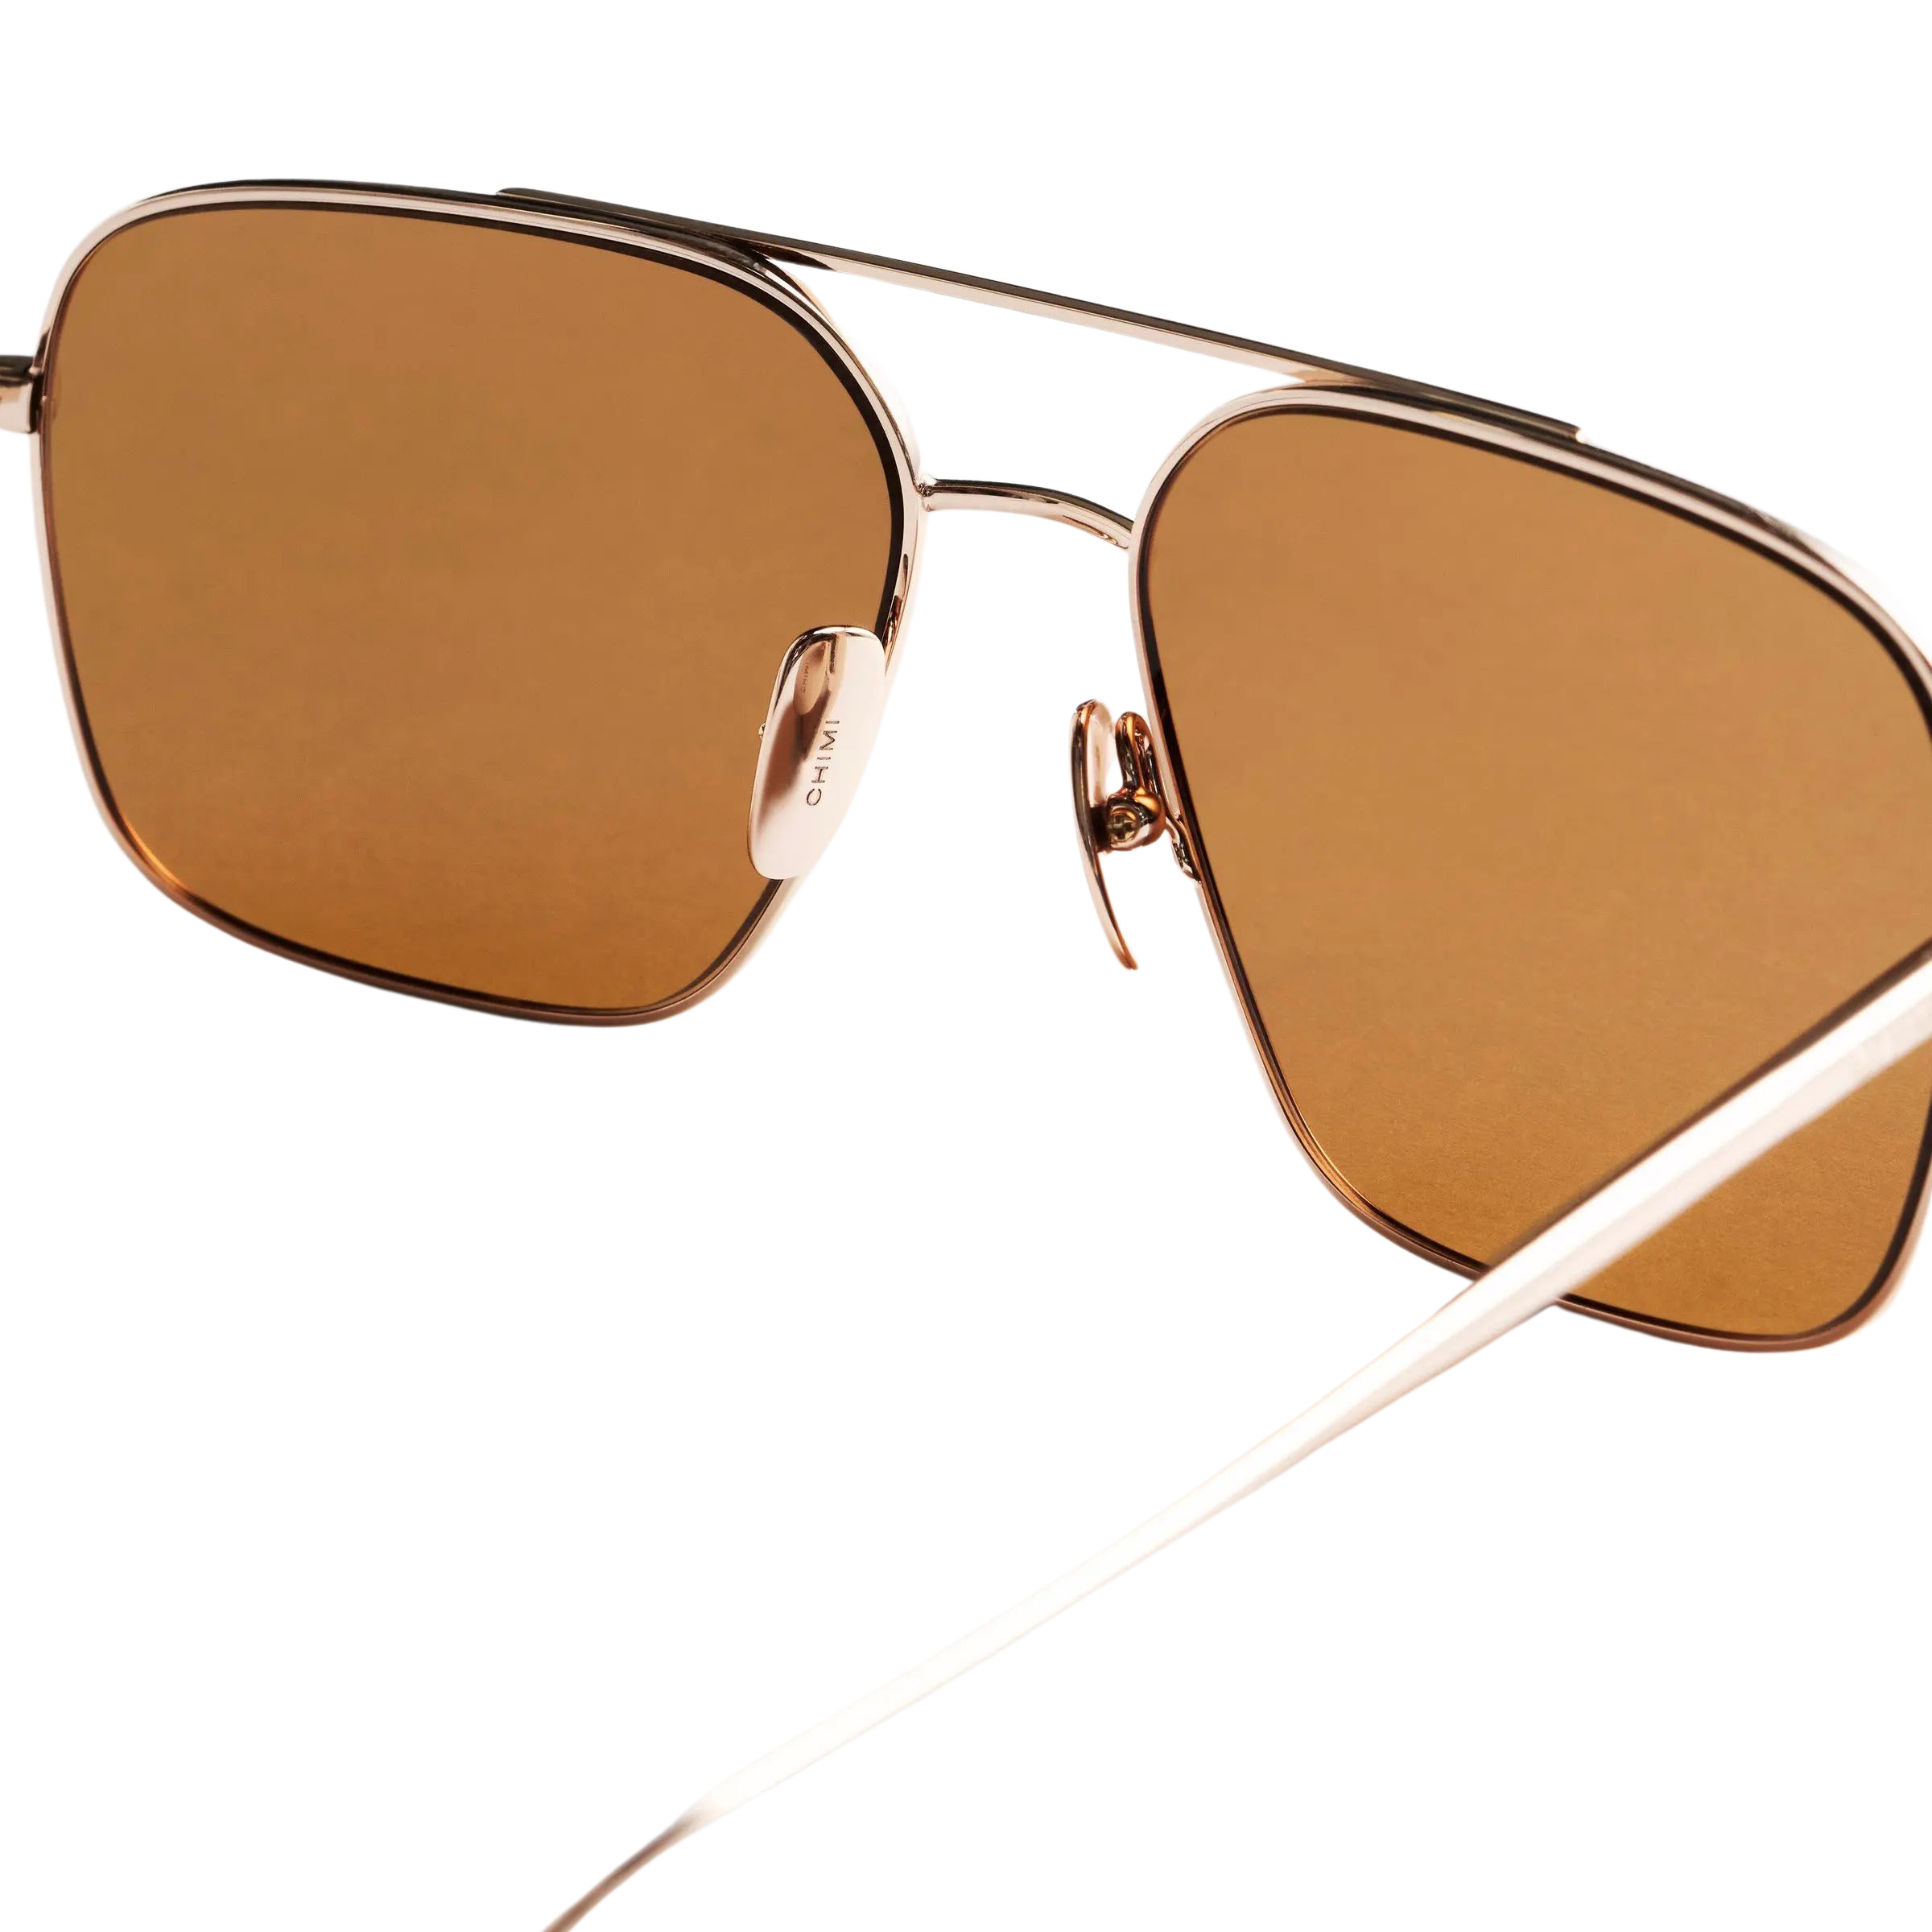 Chimi Eyewear Steel Aviator Brown Lenses Sunglasses 56mm Inside